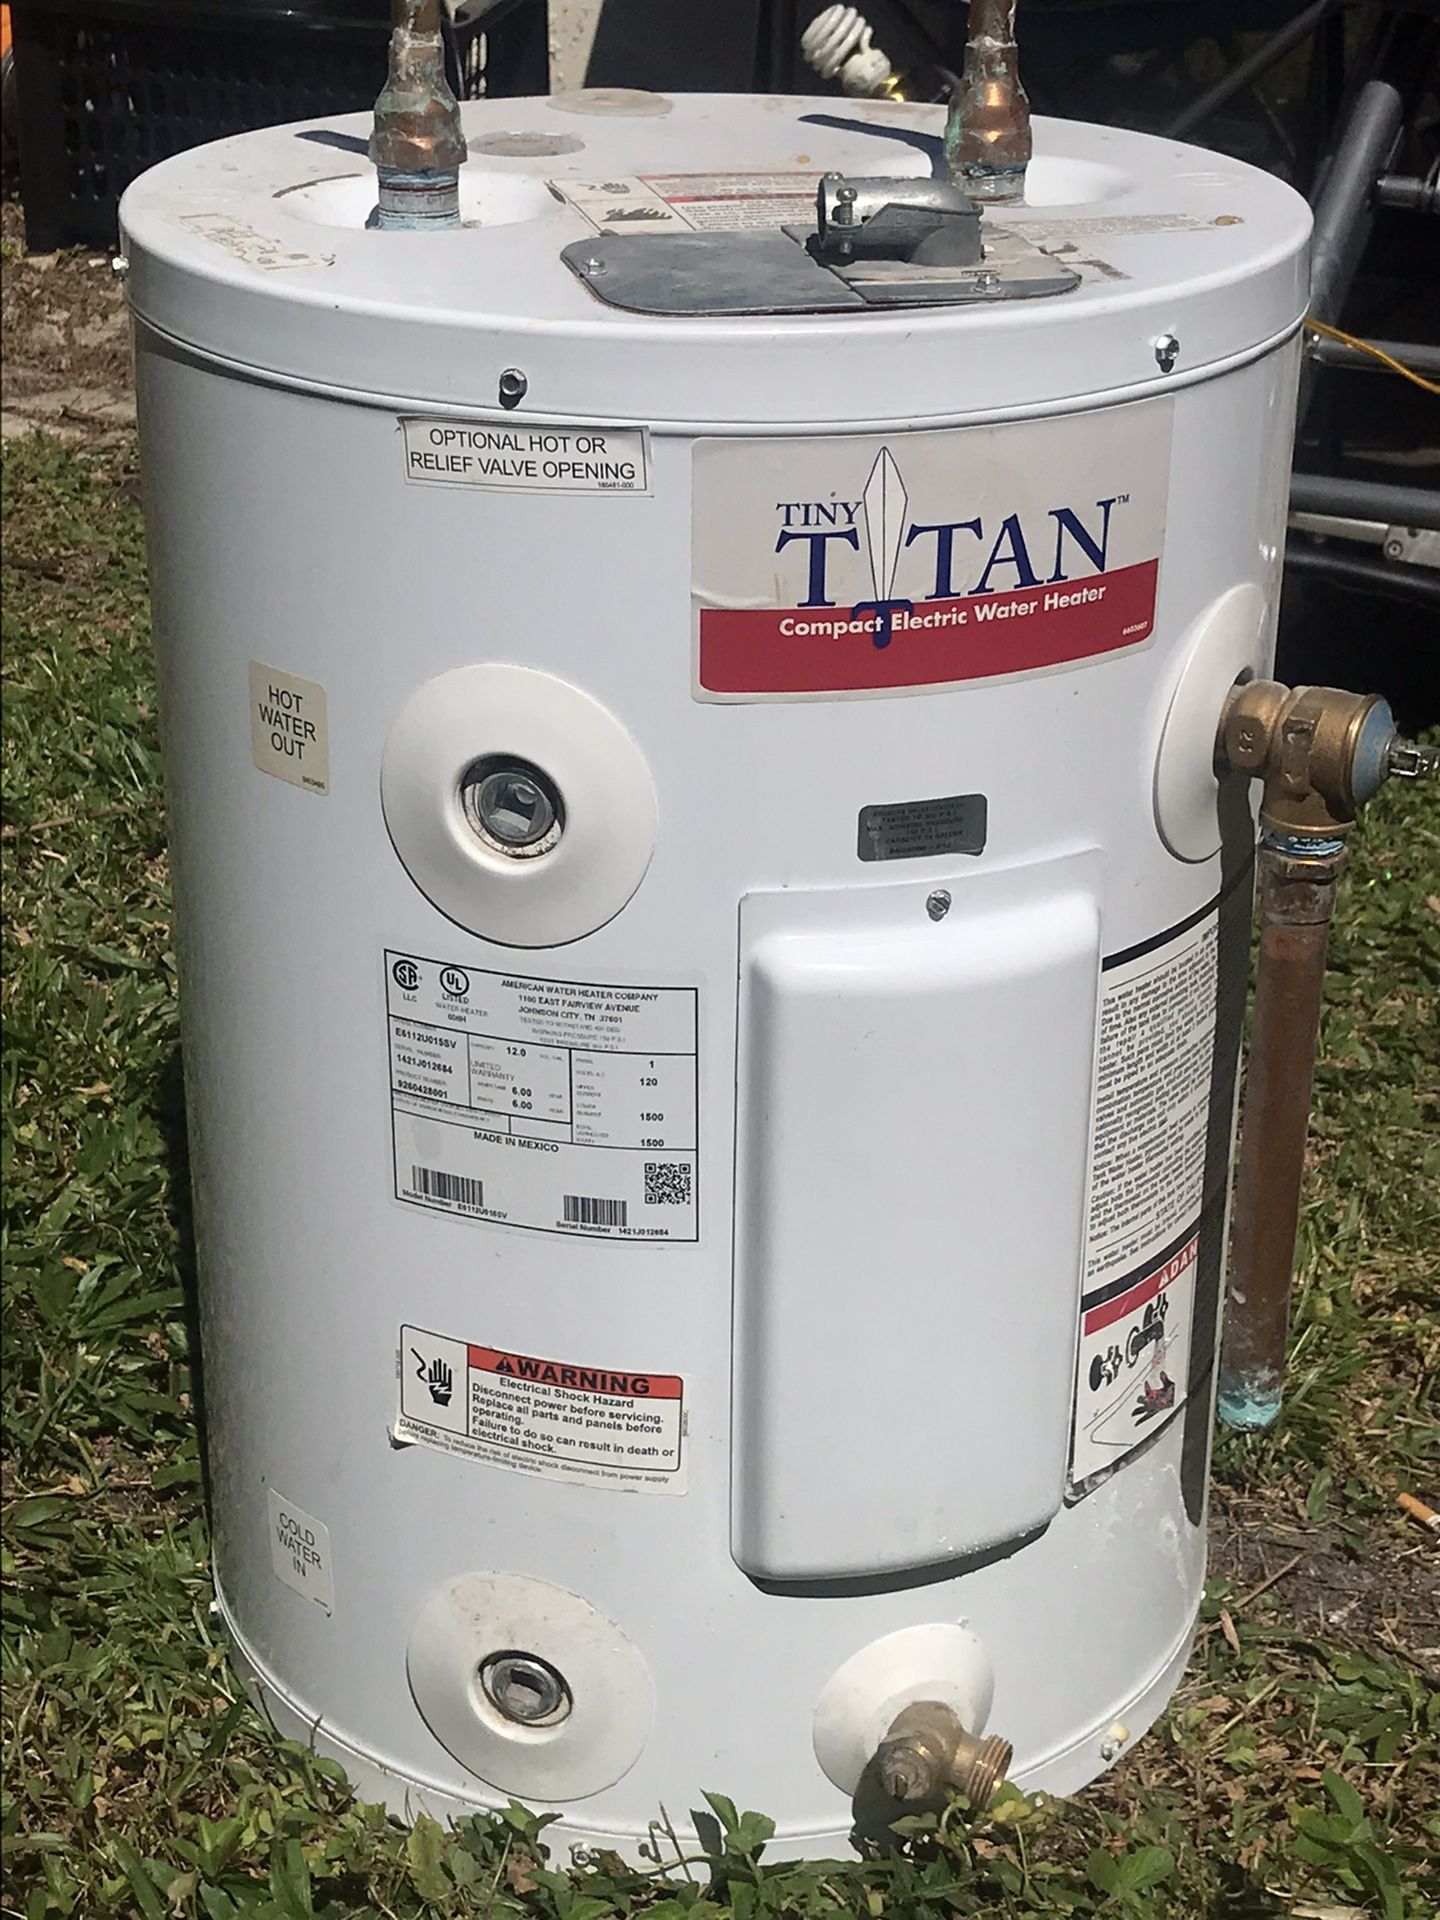 12 gallon small electric water heater used working American water heater company e6112u015sv tiny titan